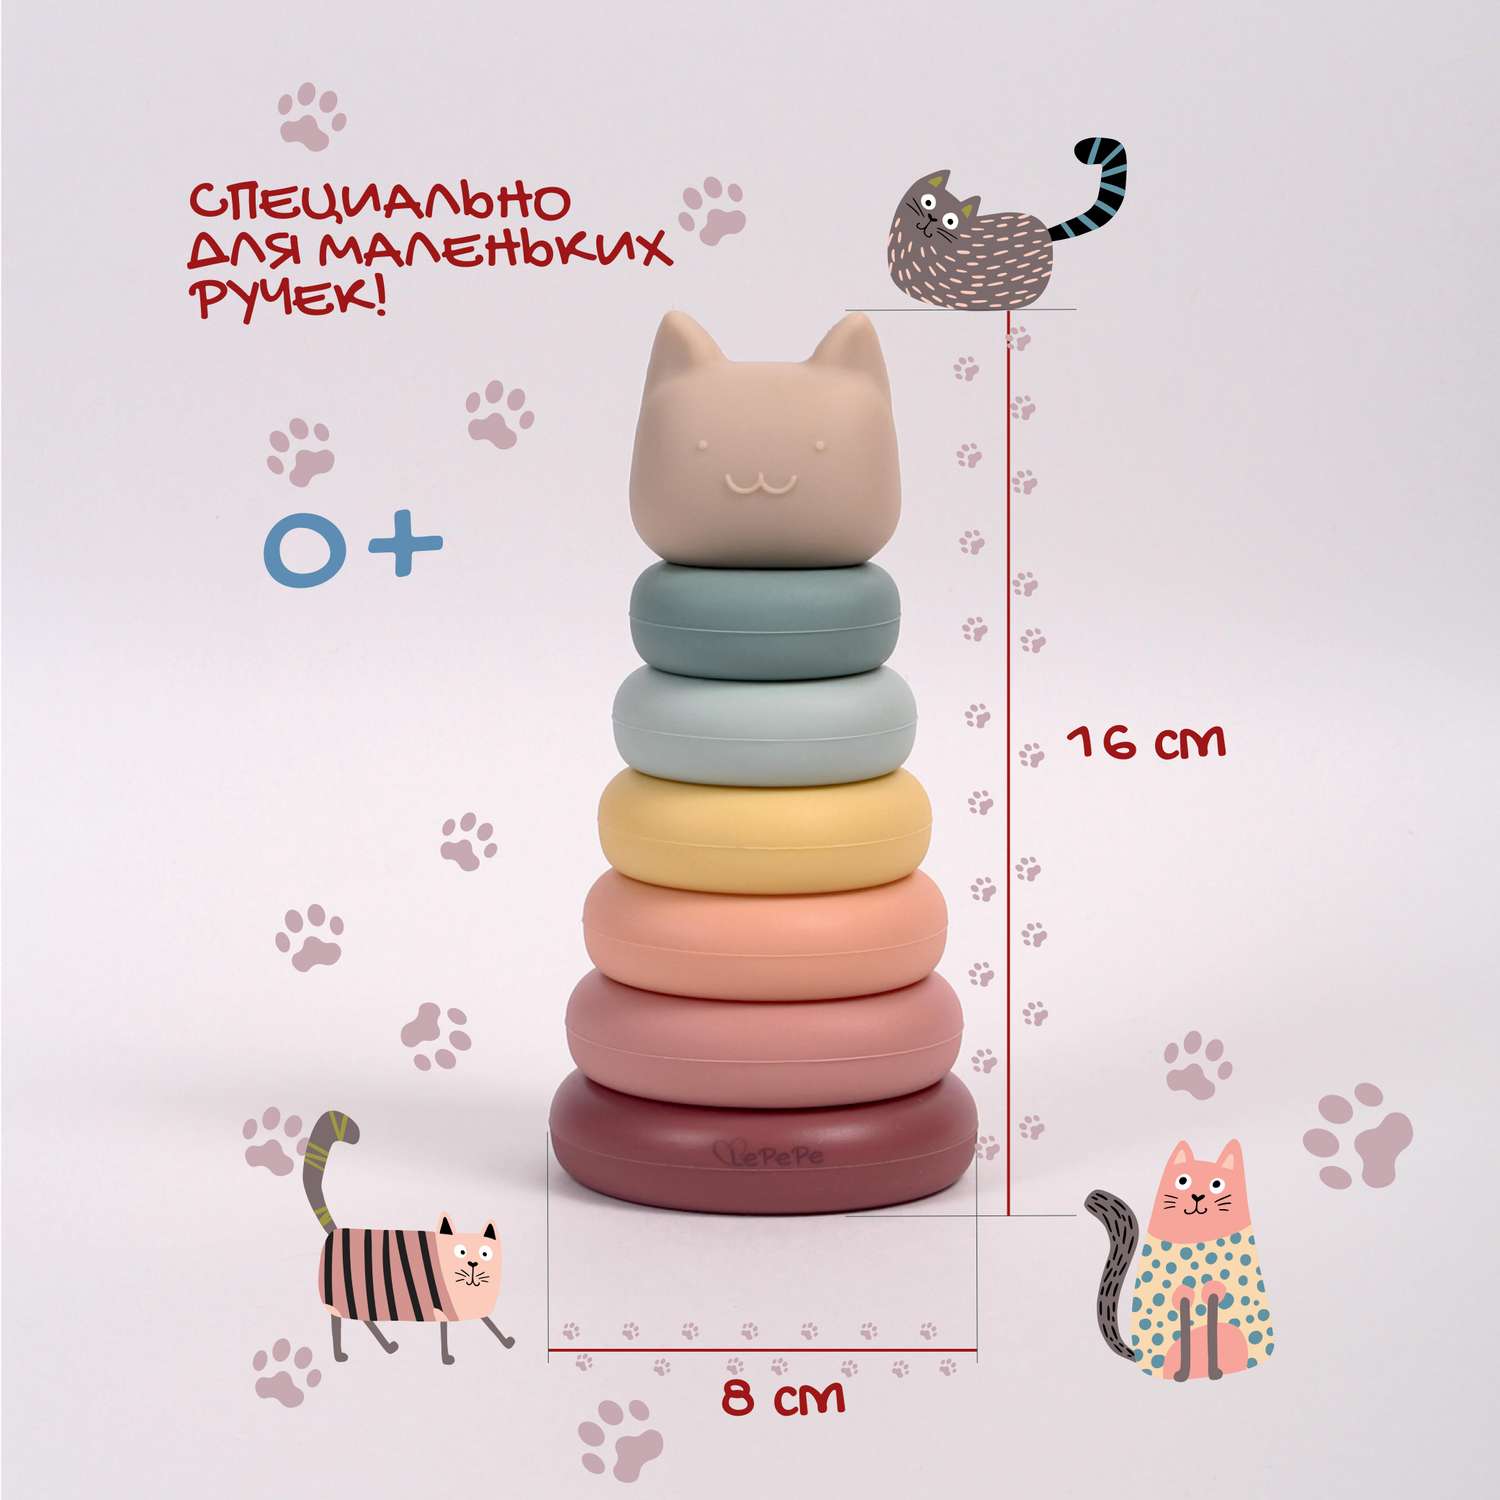 Пирамидка LePePe Кошка развивающая силиконовая - фото 3